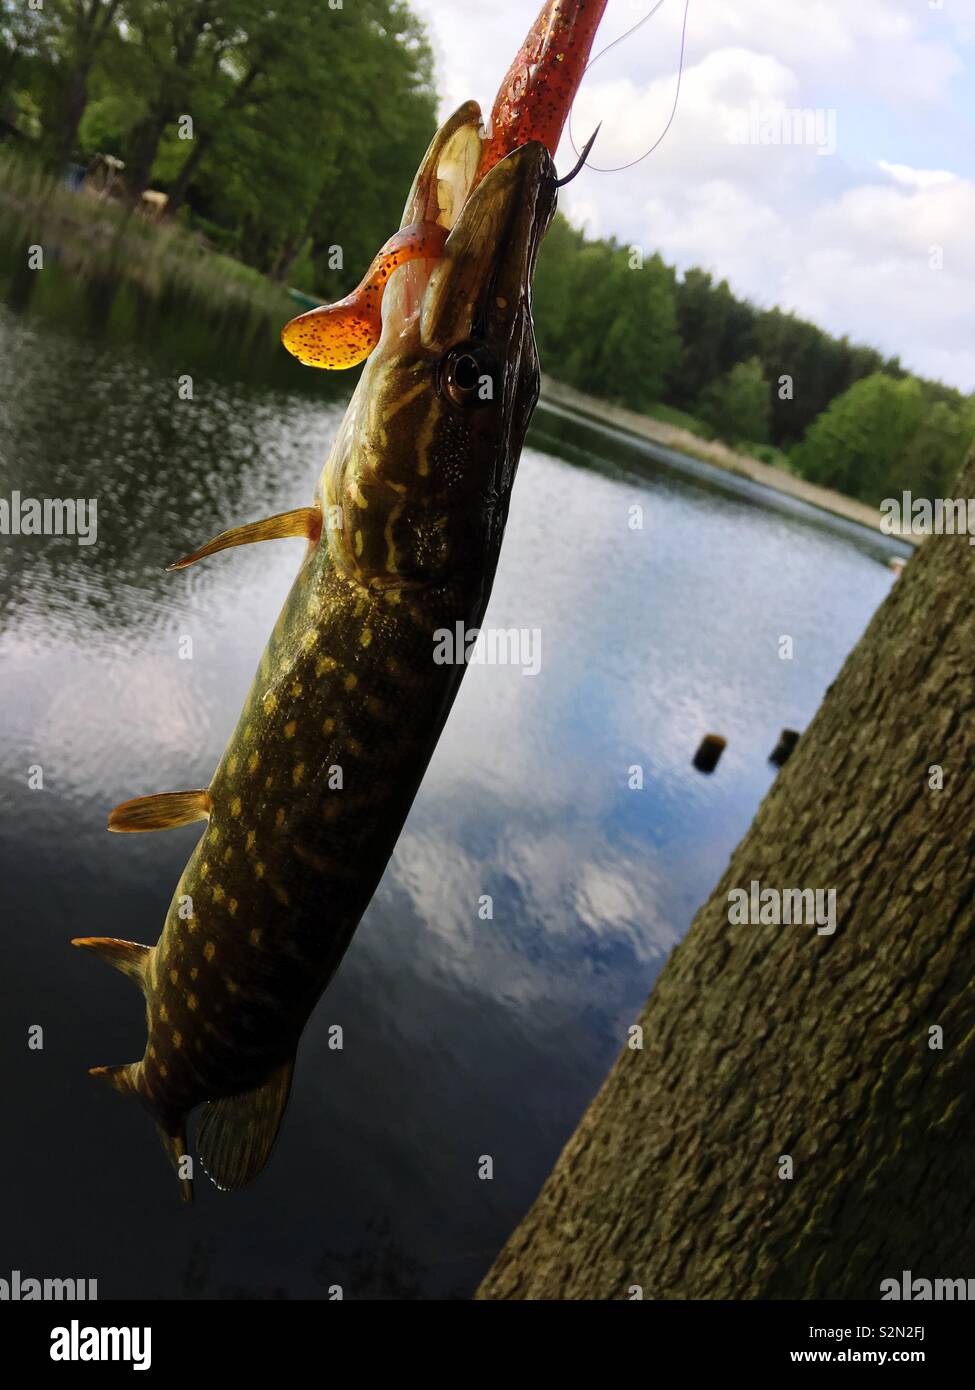 https://c8.alamy.com/comp/S2N2FJ/european-pike-caught-with-a-rubber-fishing-lure-S2N2FJ.jpg